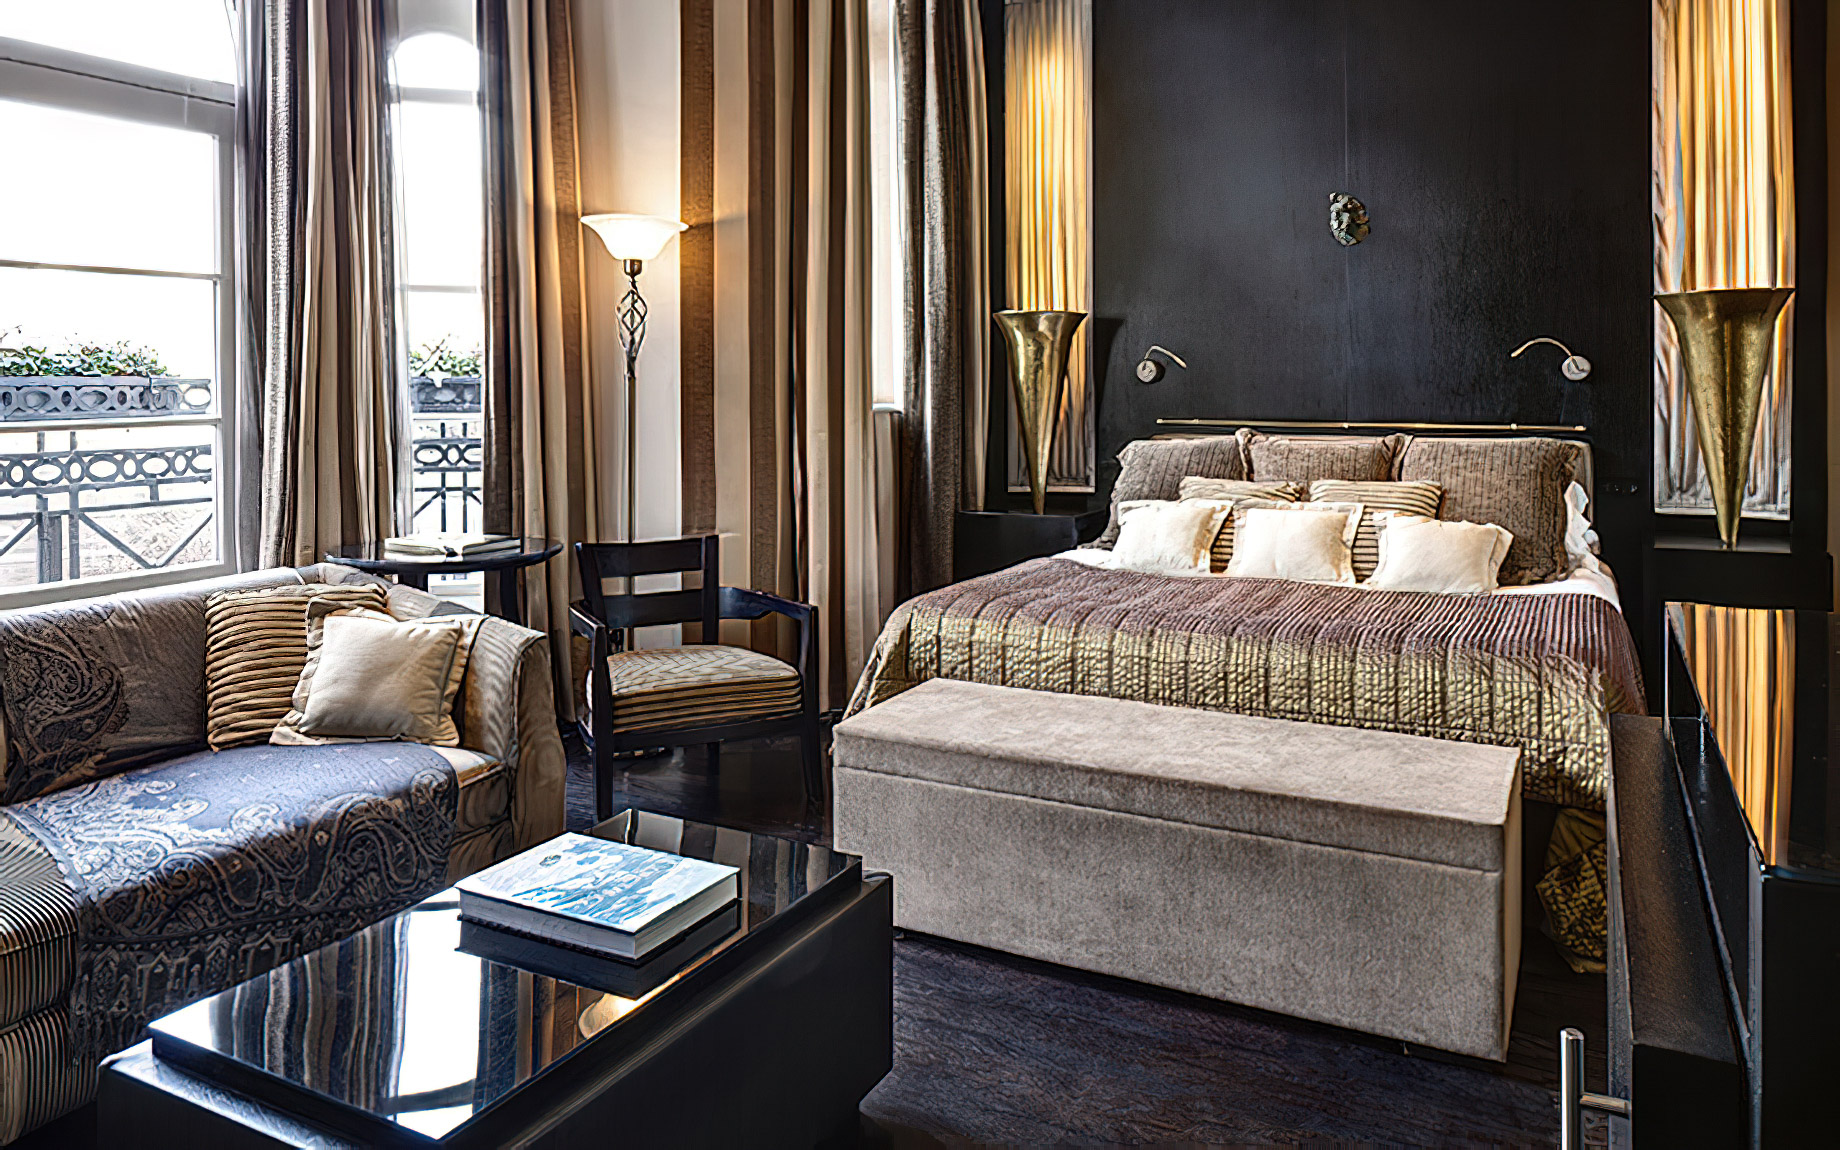 Baglioni Hotel London – South Kensington, London, United Kingdom – Royal Suite Bedroom